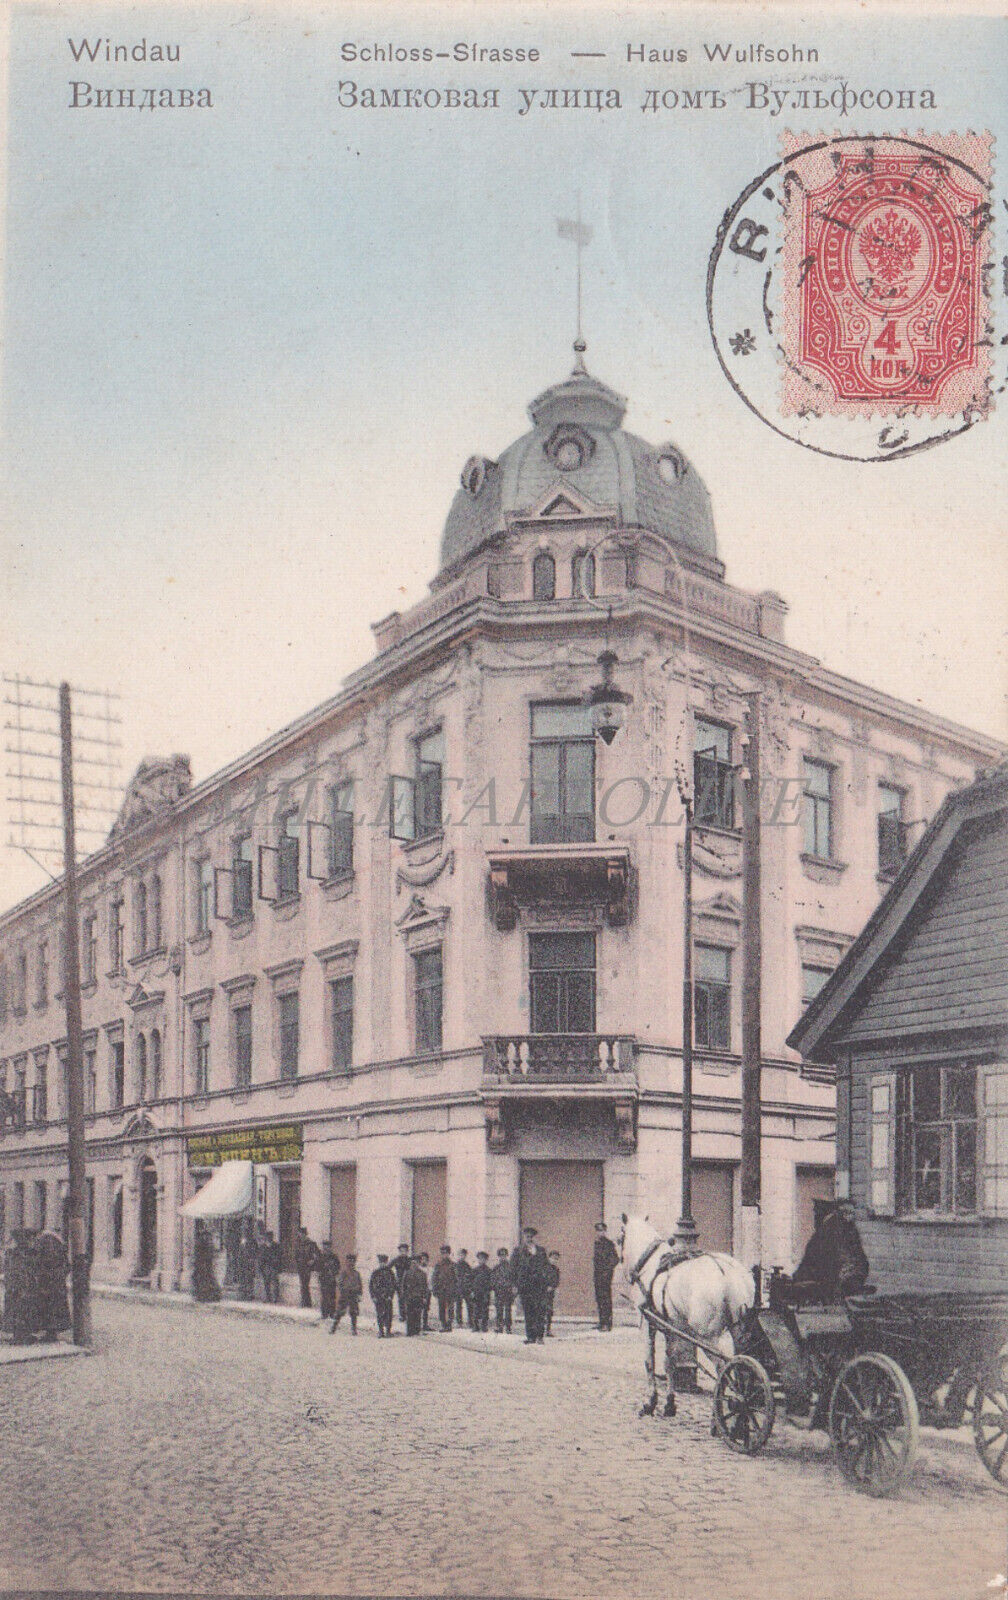 LATVIA - Windau, Ventspils, Schloss-Strasse, Haus Wulfsohn, Postcard 1908